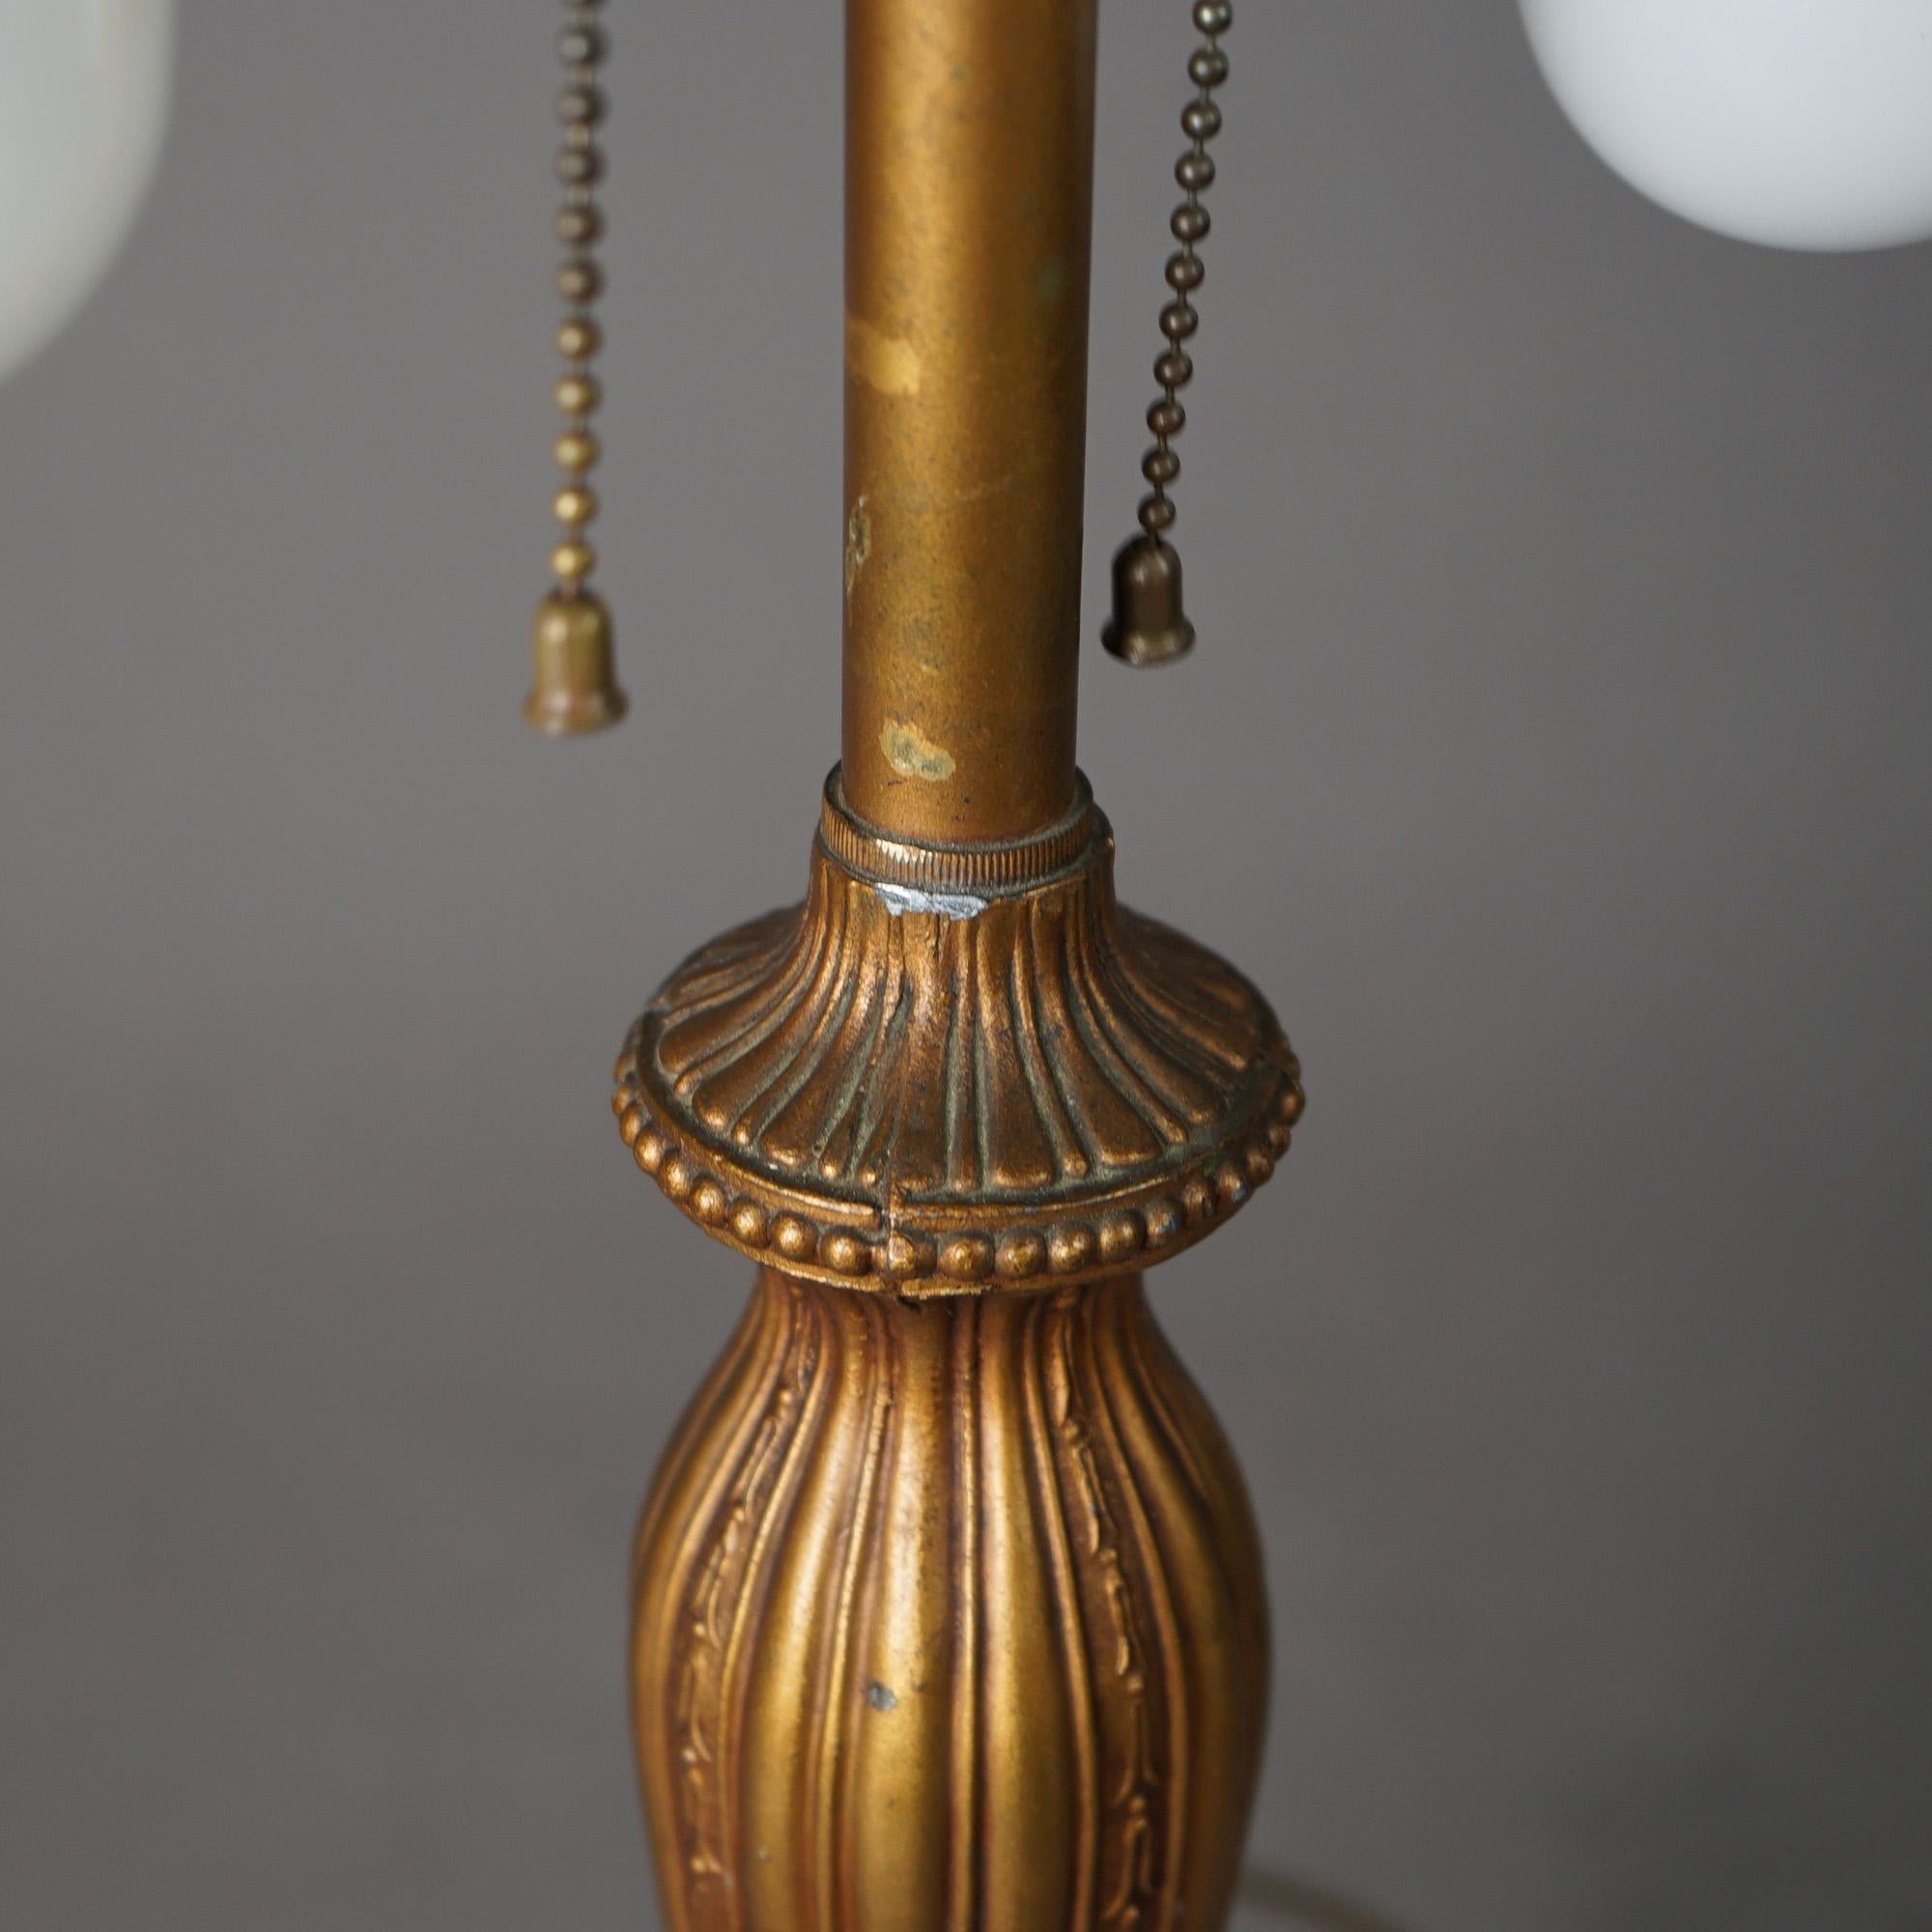 Antique Arts & Crafts Bradley & Hubbard School Slag Glass Table Lamp c1920 For Sale 5